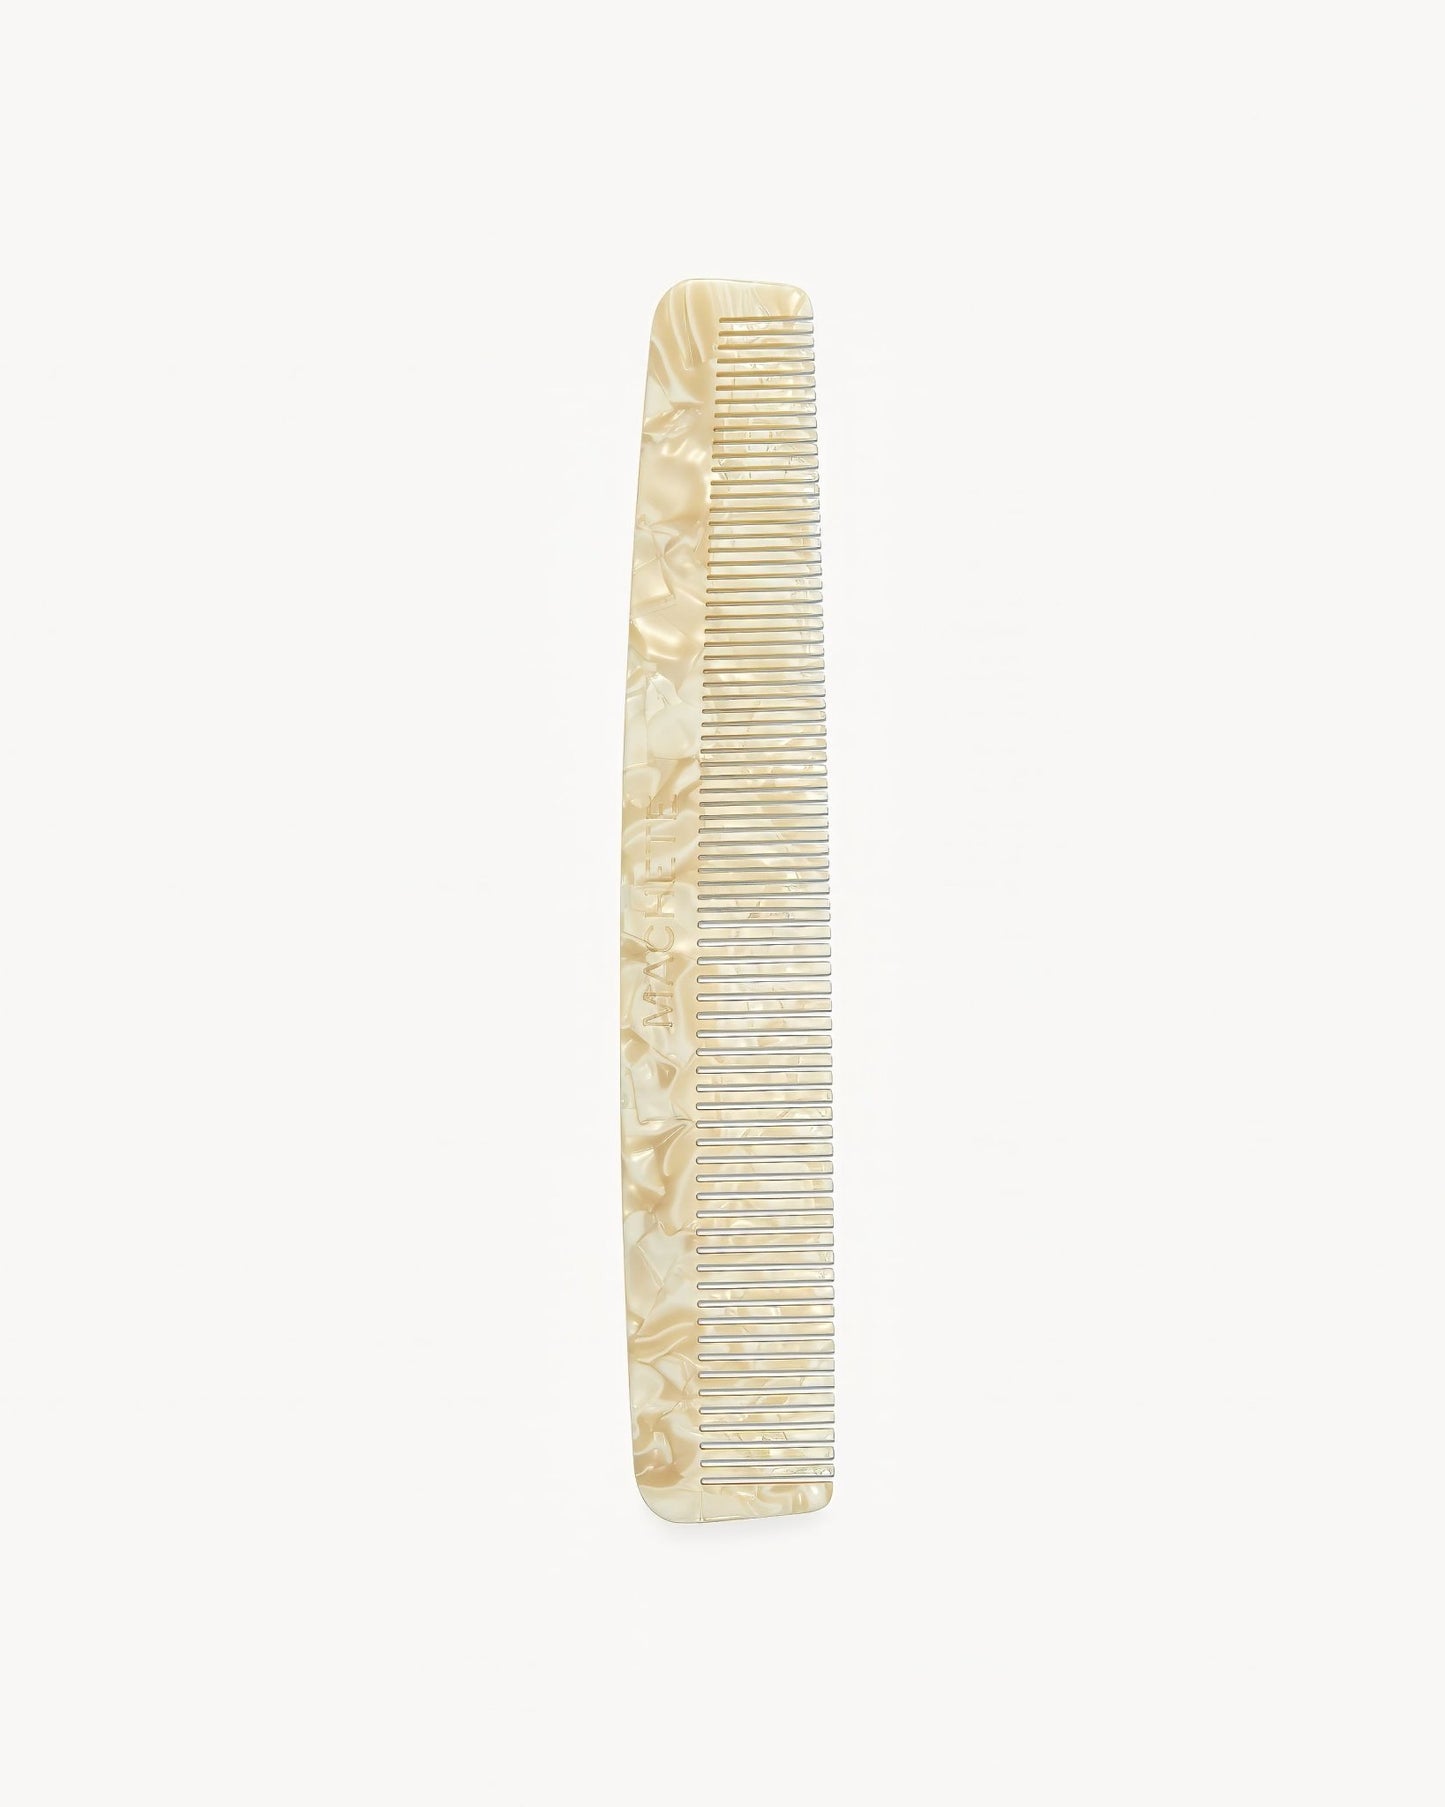 MACHETE No. 1 Comb in Ivory